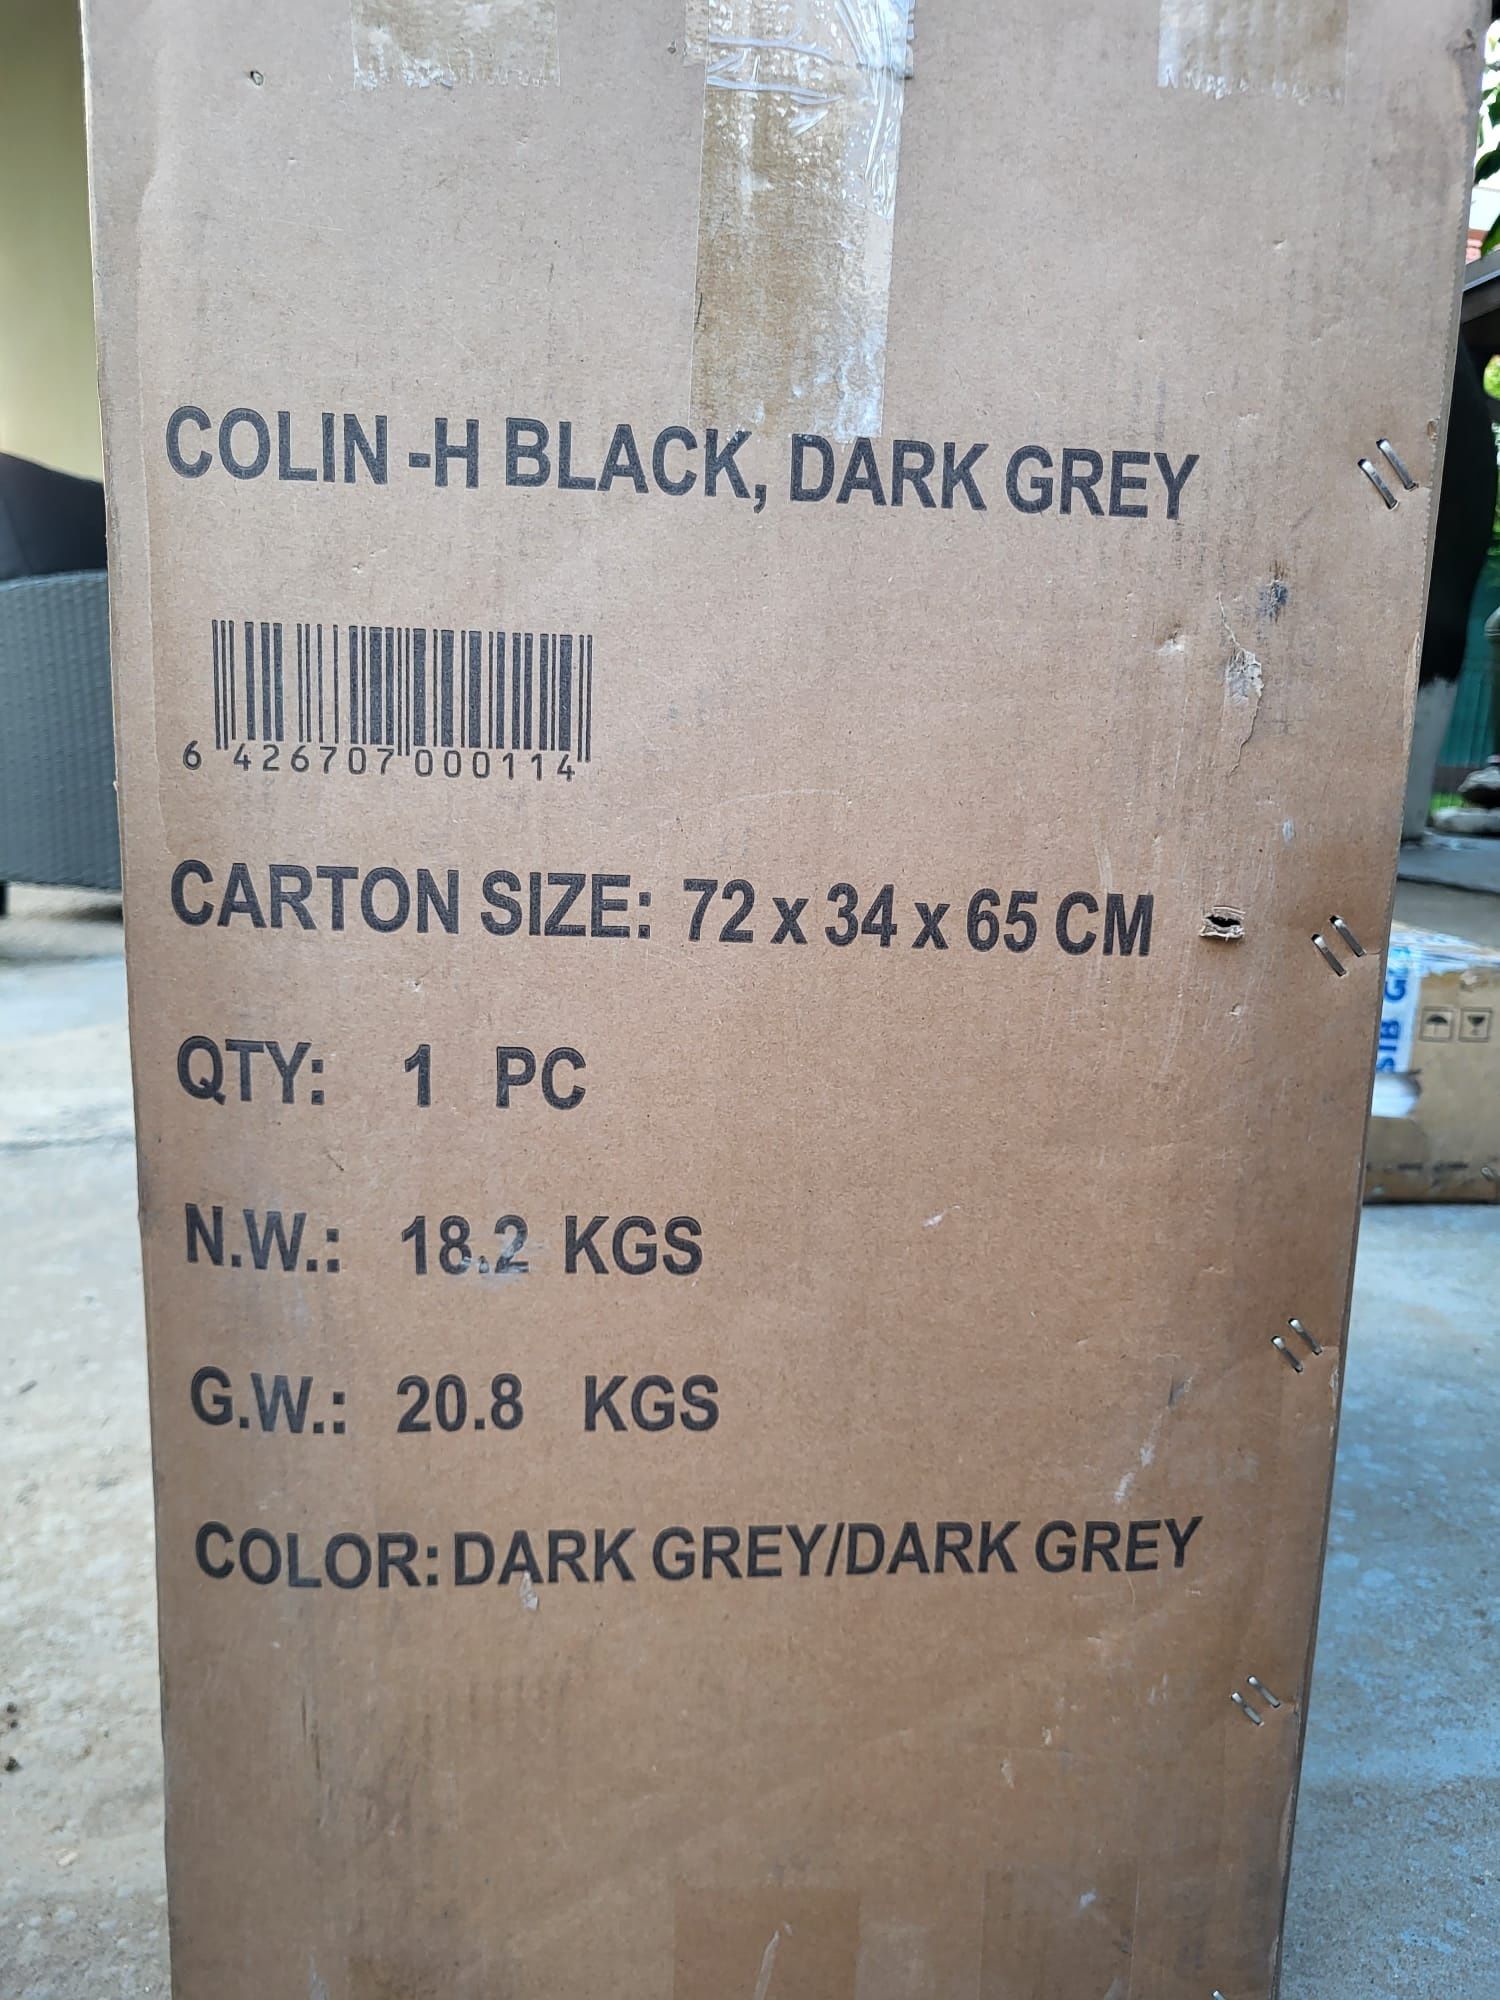 Scaun Ergoplus Colin h black, dark grey